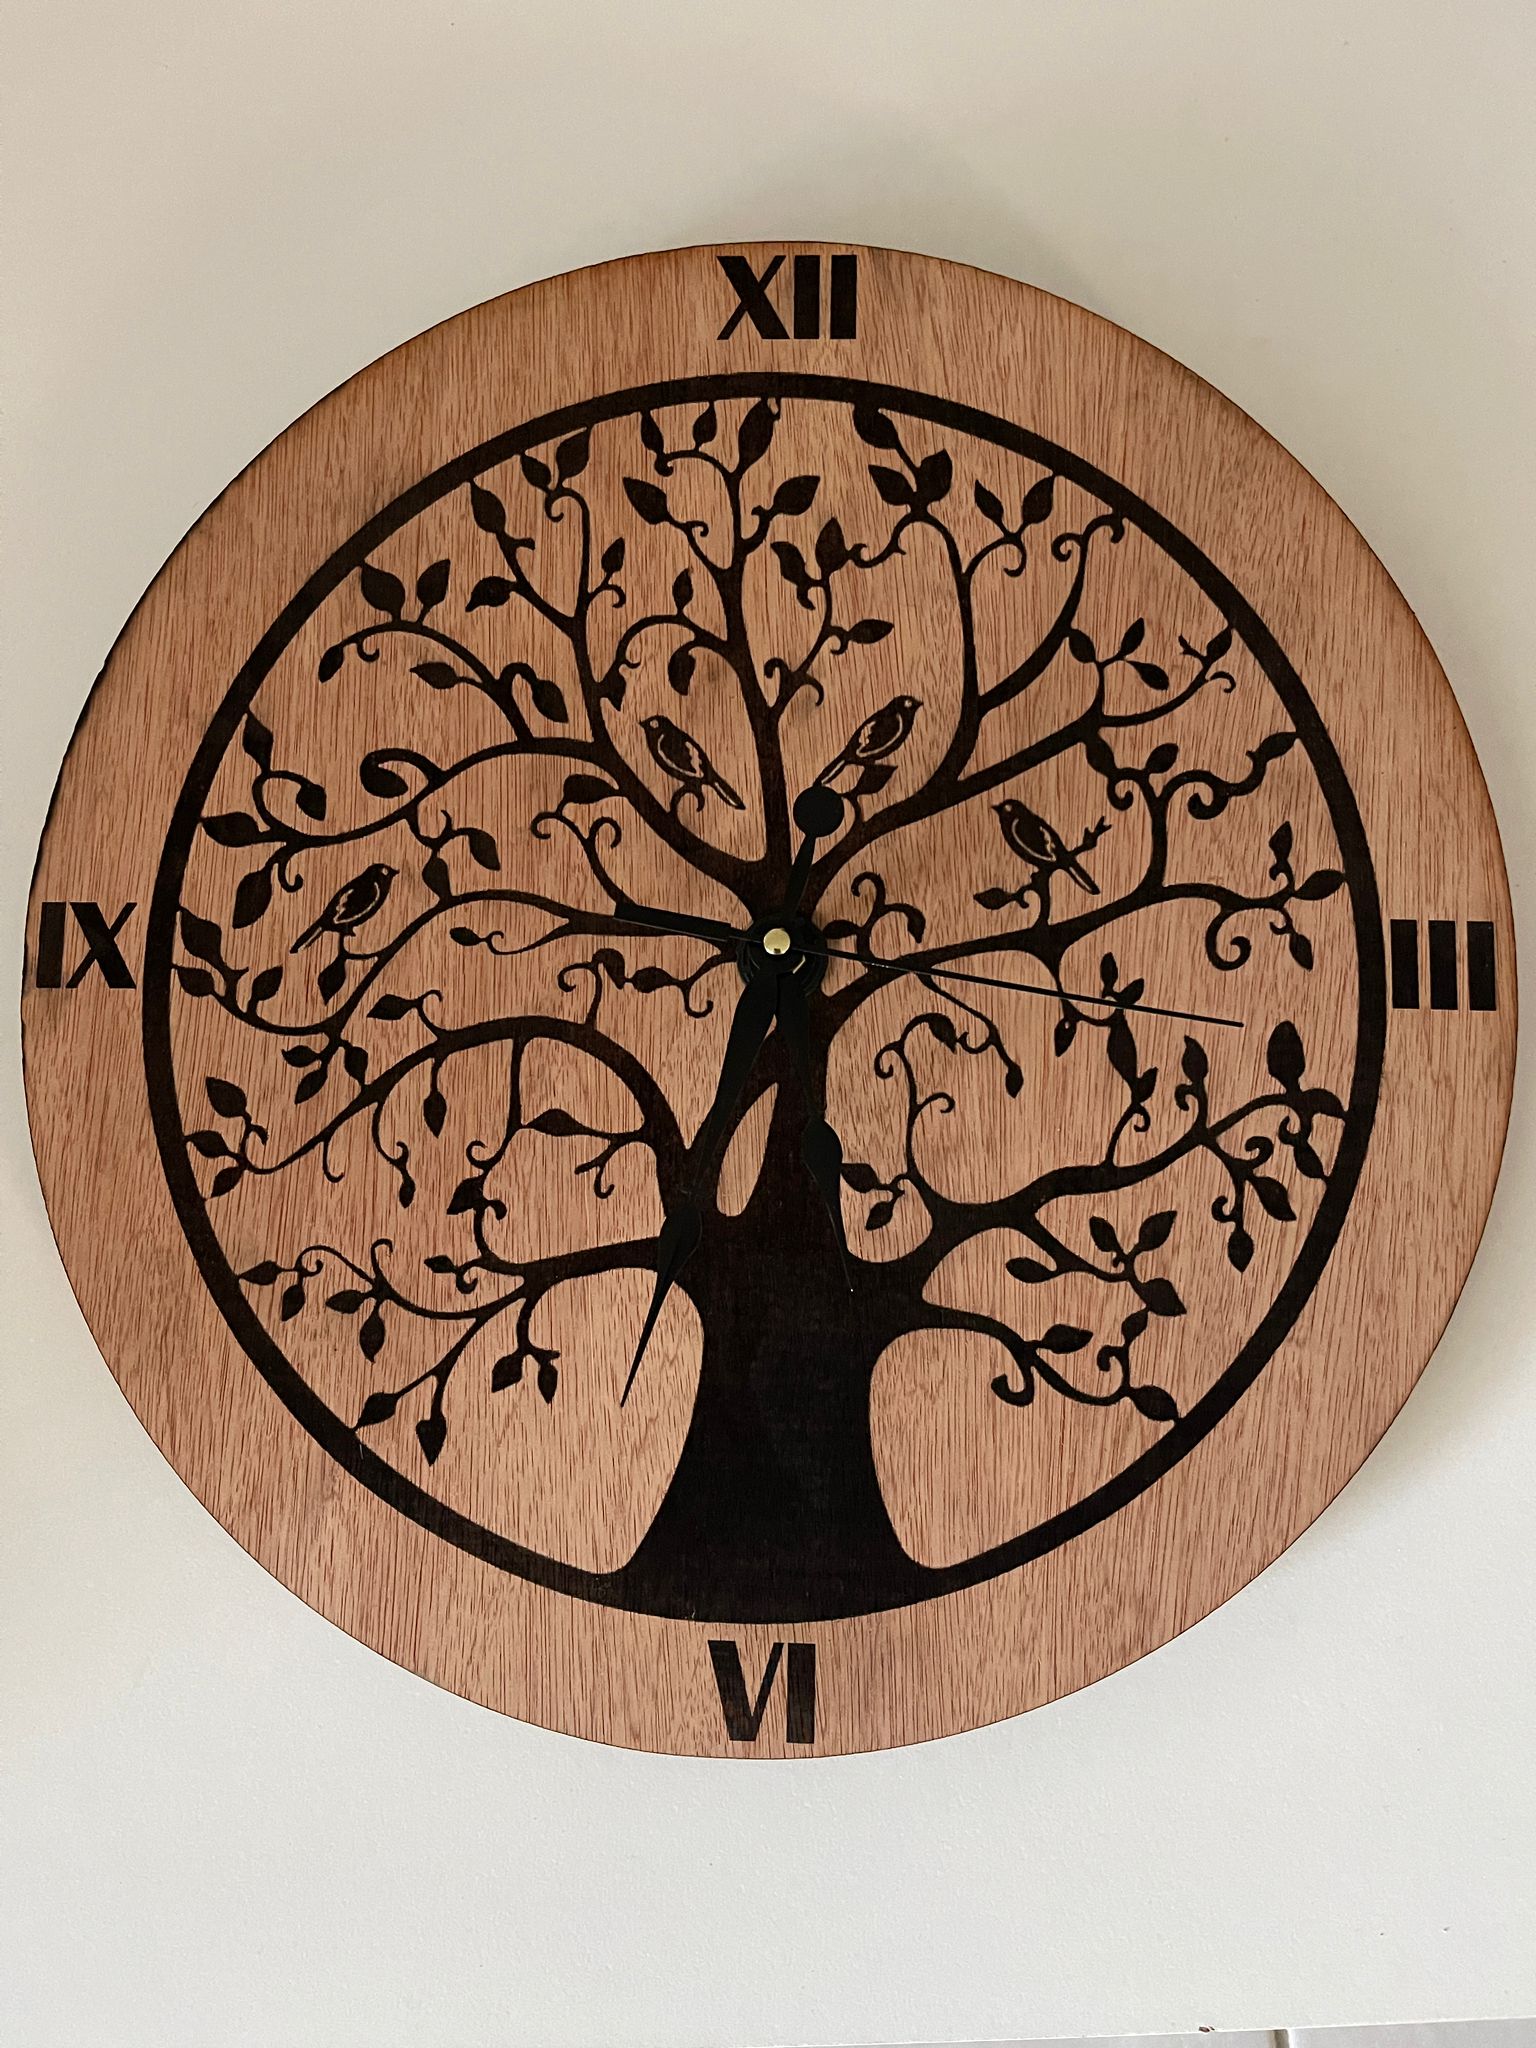 fh-creation-horloge-HORLOGE ARBRE DE VIE